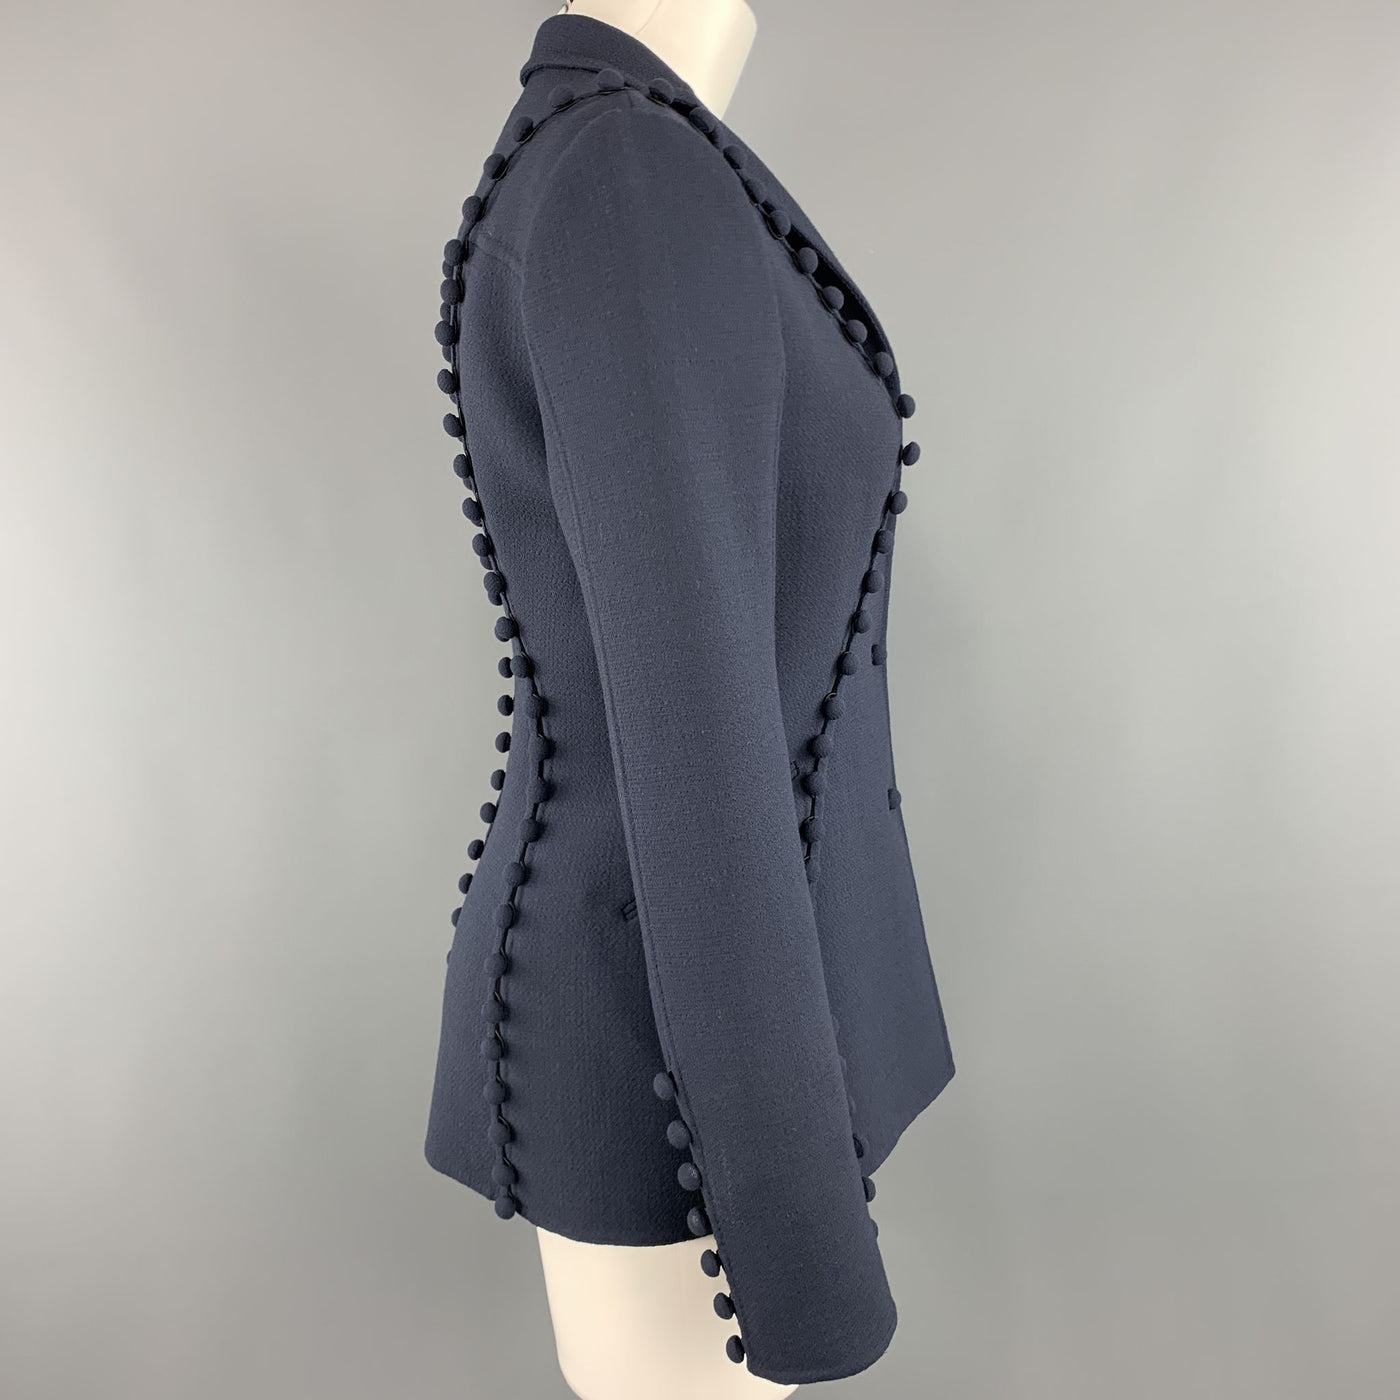 CHADO RALPH RUCCI Size 2 Navy Crepe Wool Button Trim Notch Lapel Jacket